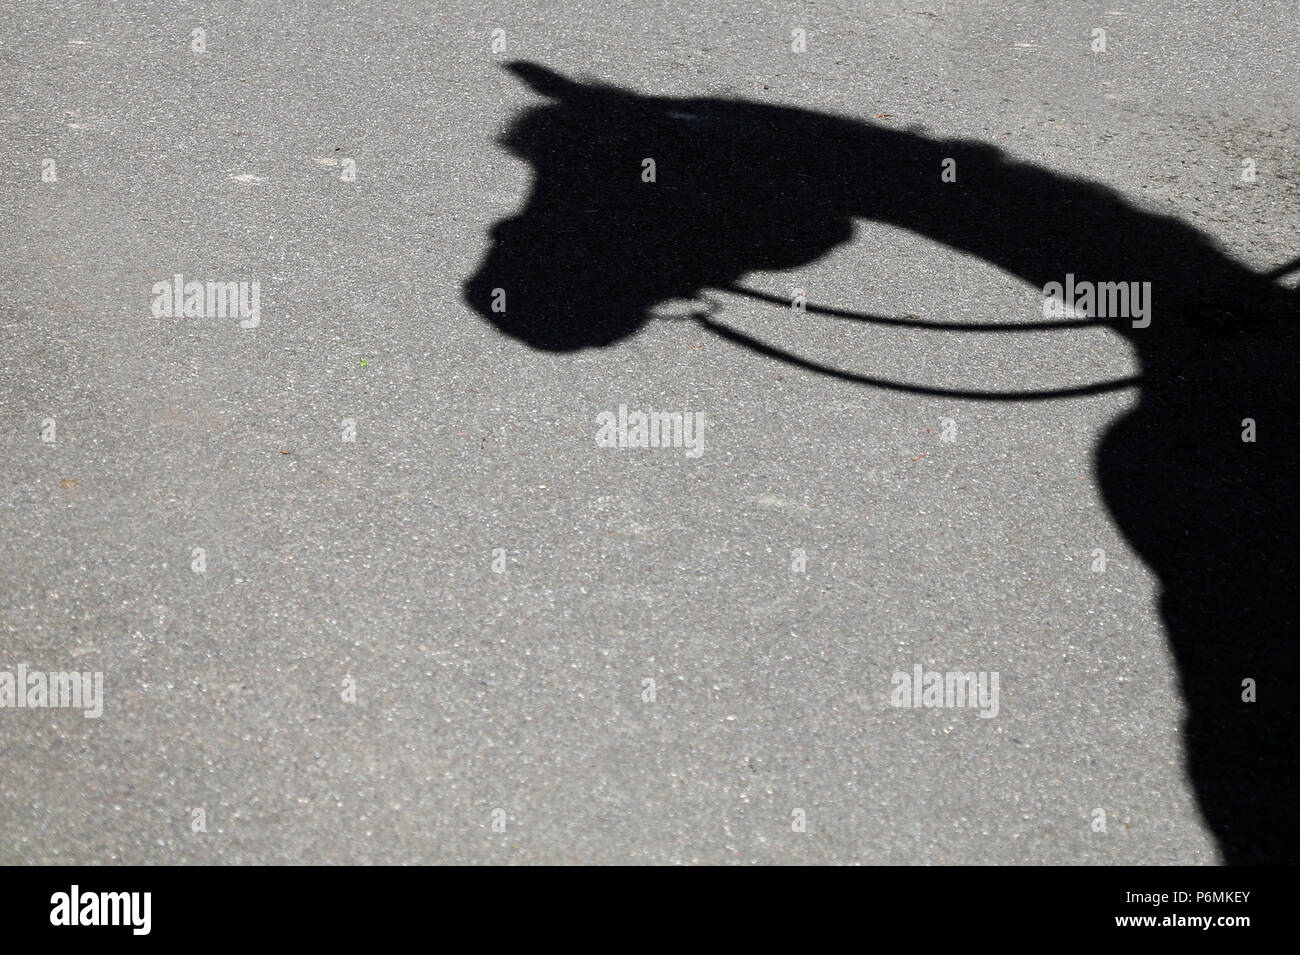 Melbeck, horse casts a shadow on the asphalt Stock Photo